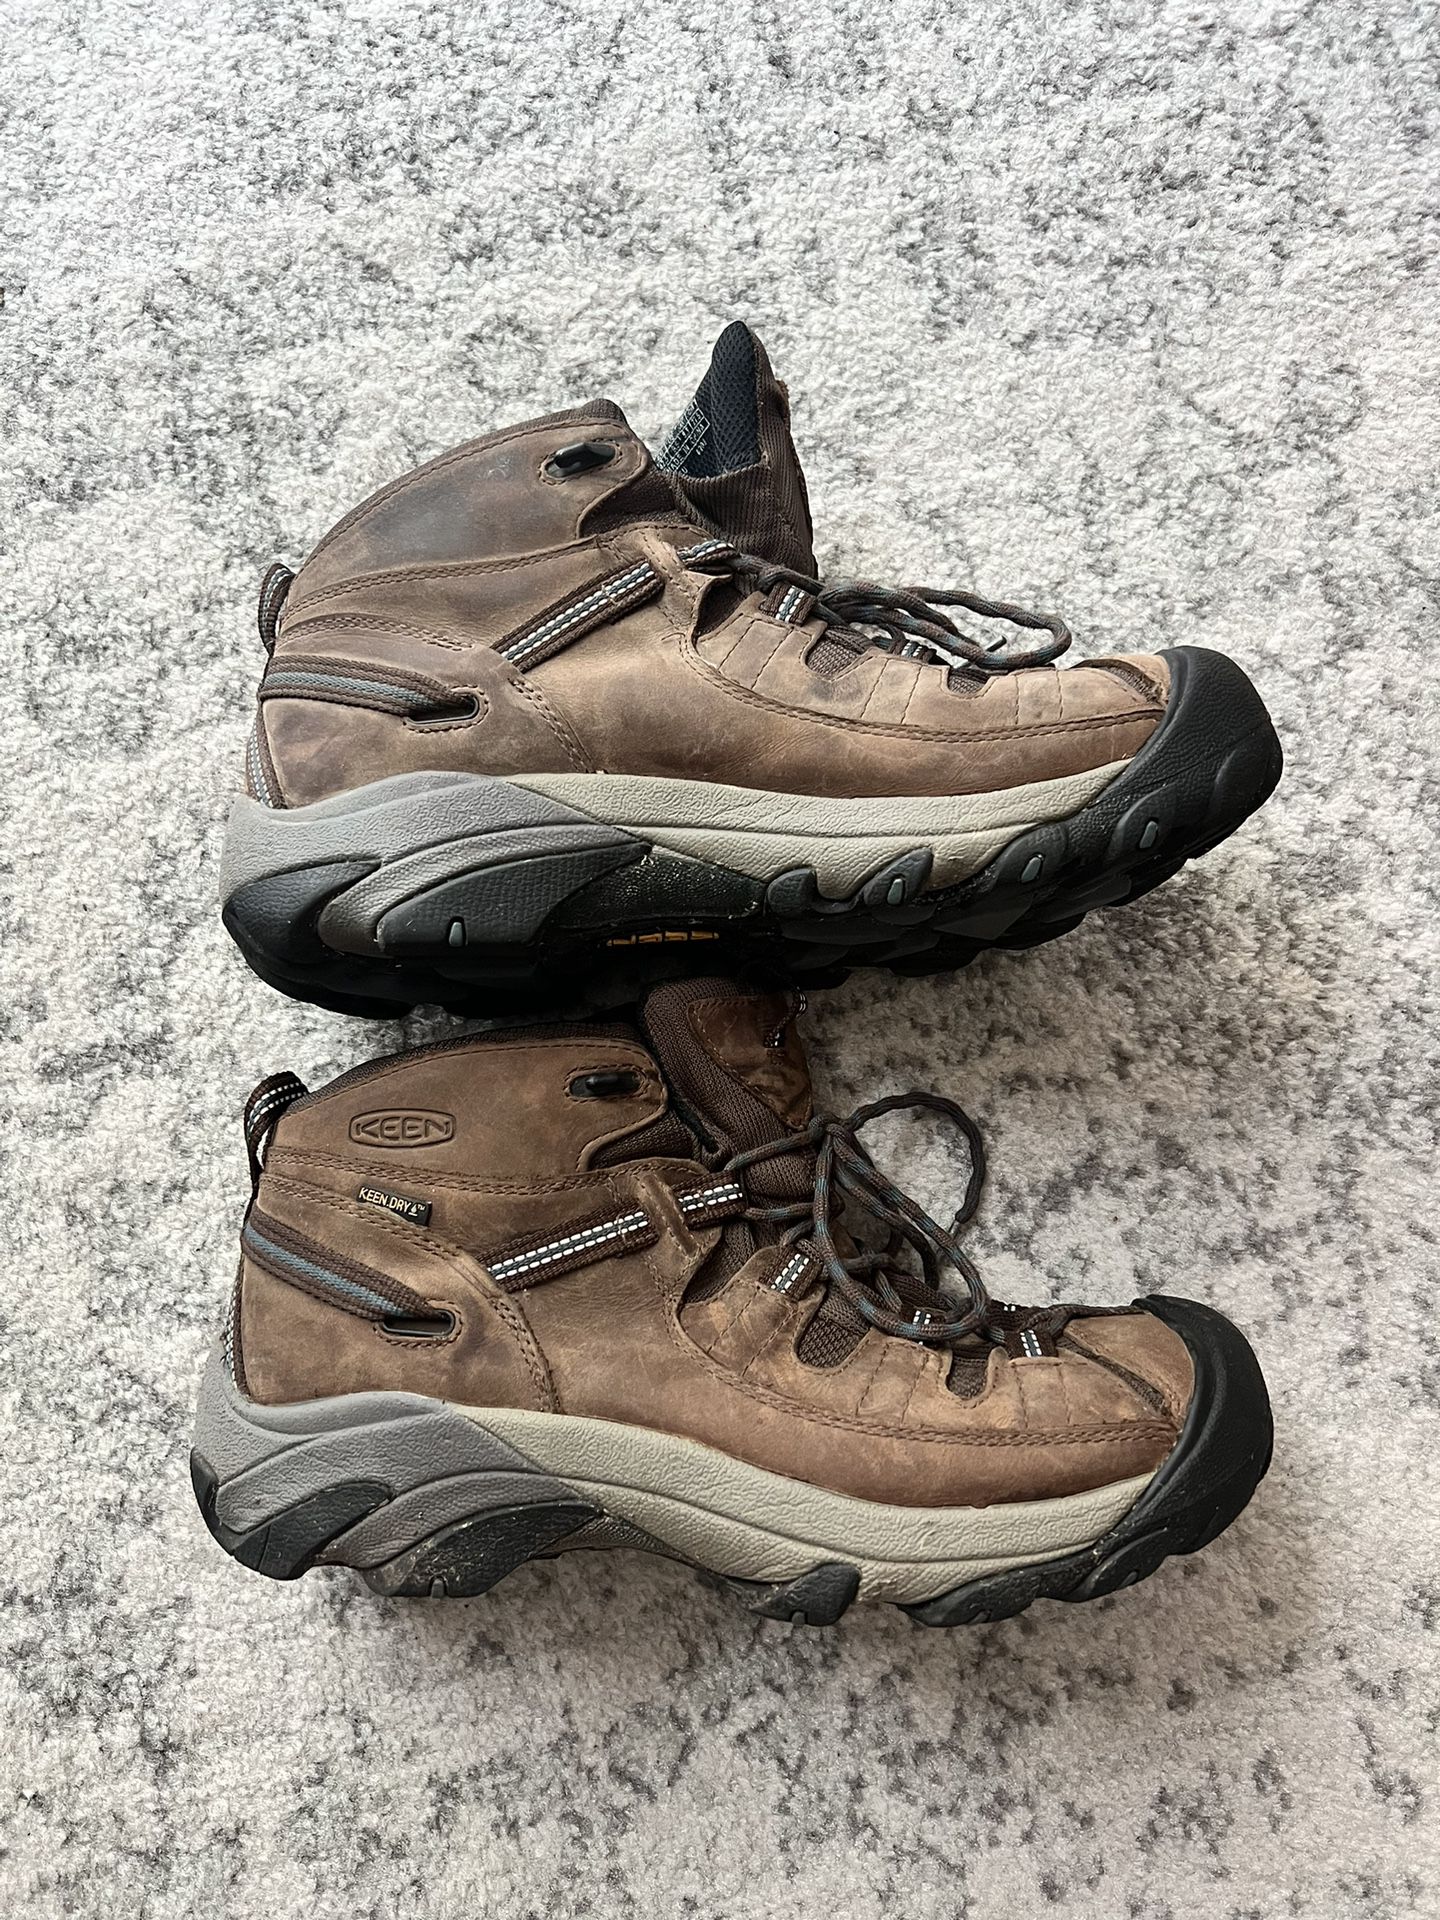 Men's Hiking Boots - Keen